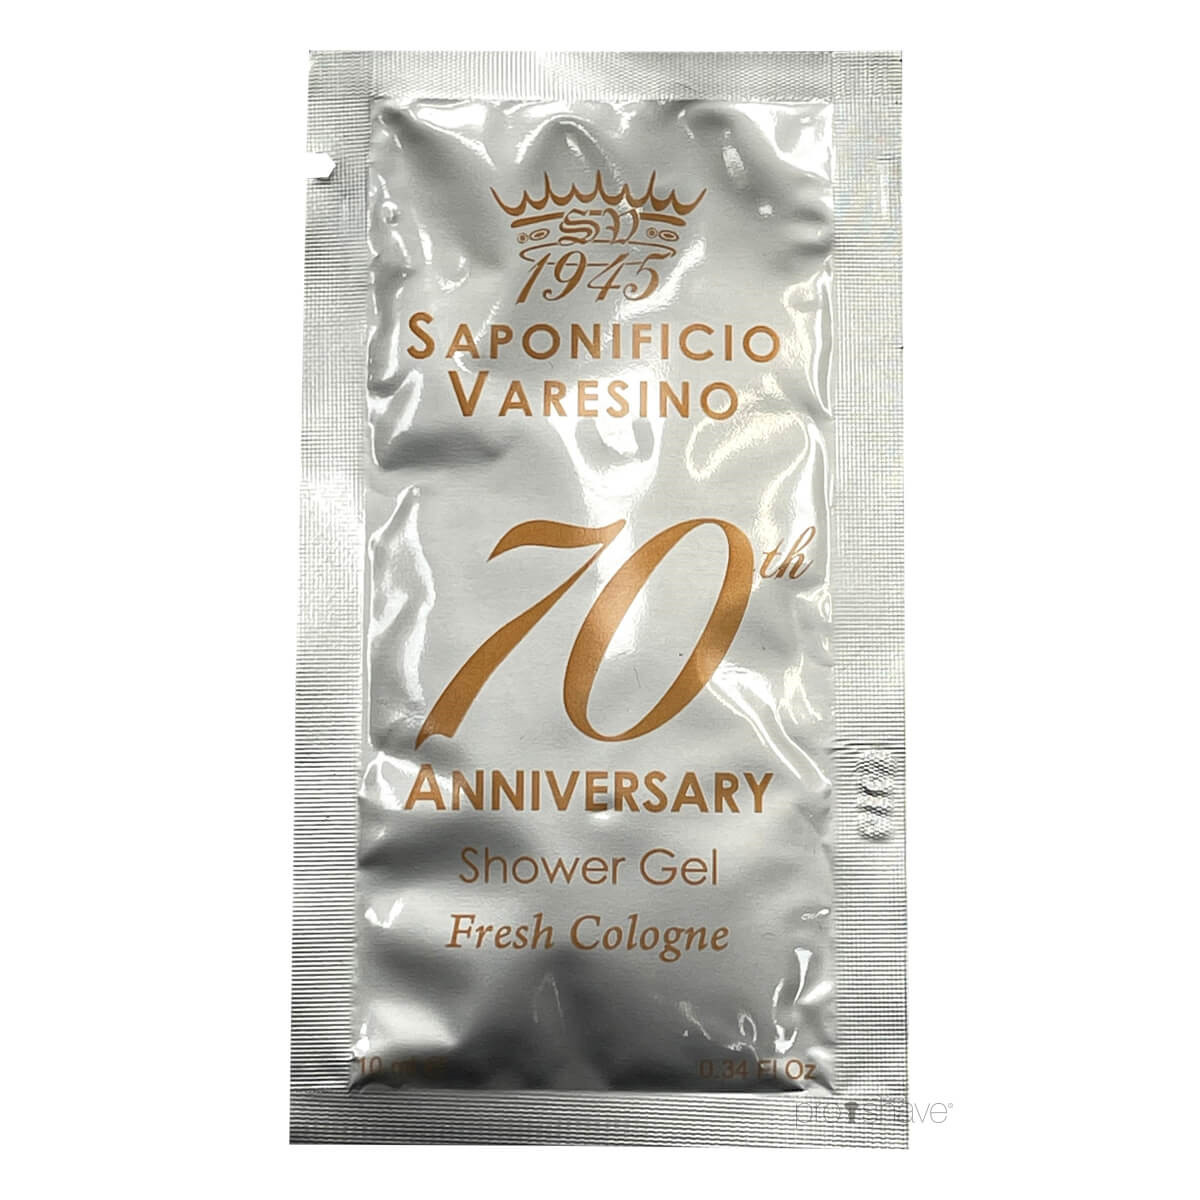 Billede af Saponificio Varesino Shower Gel, 70th Anniversary, Sample, 10 ml.